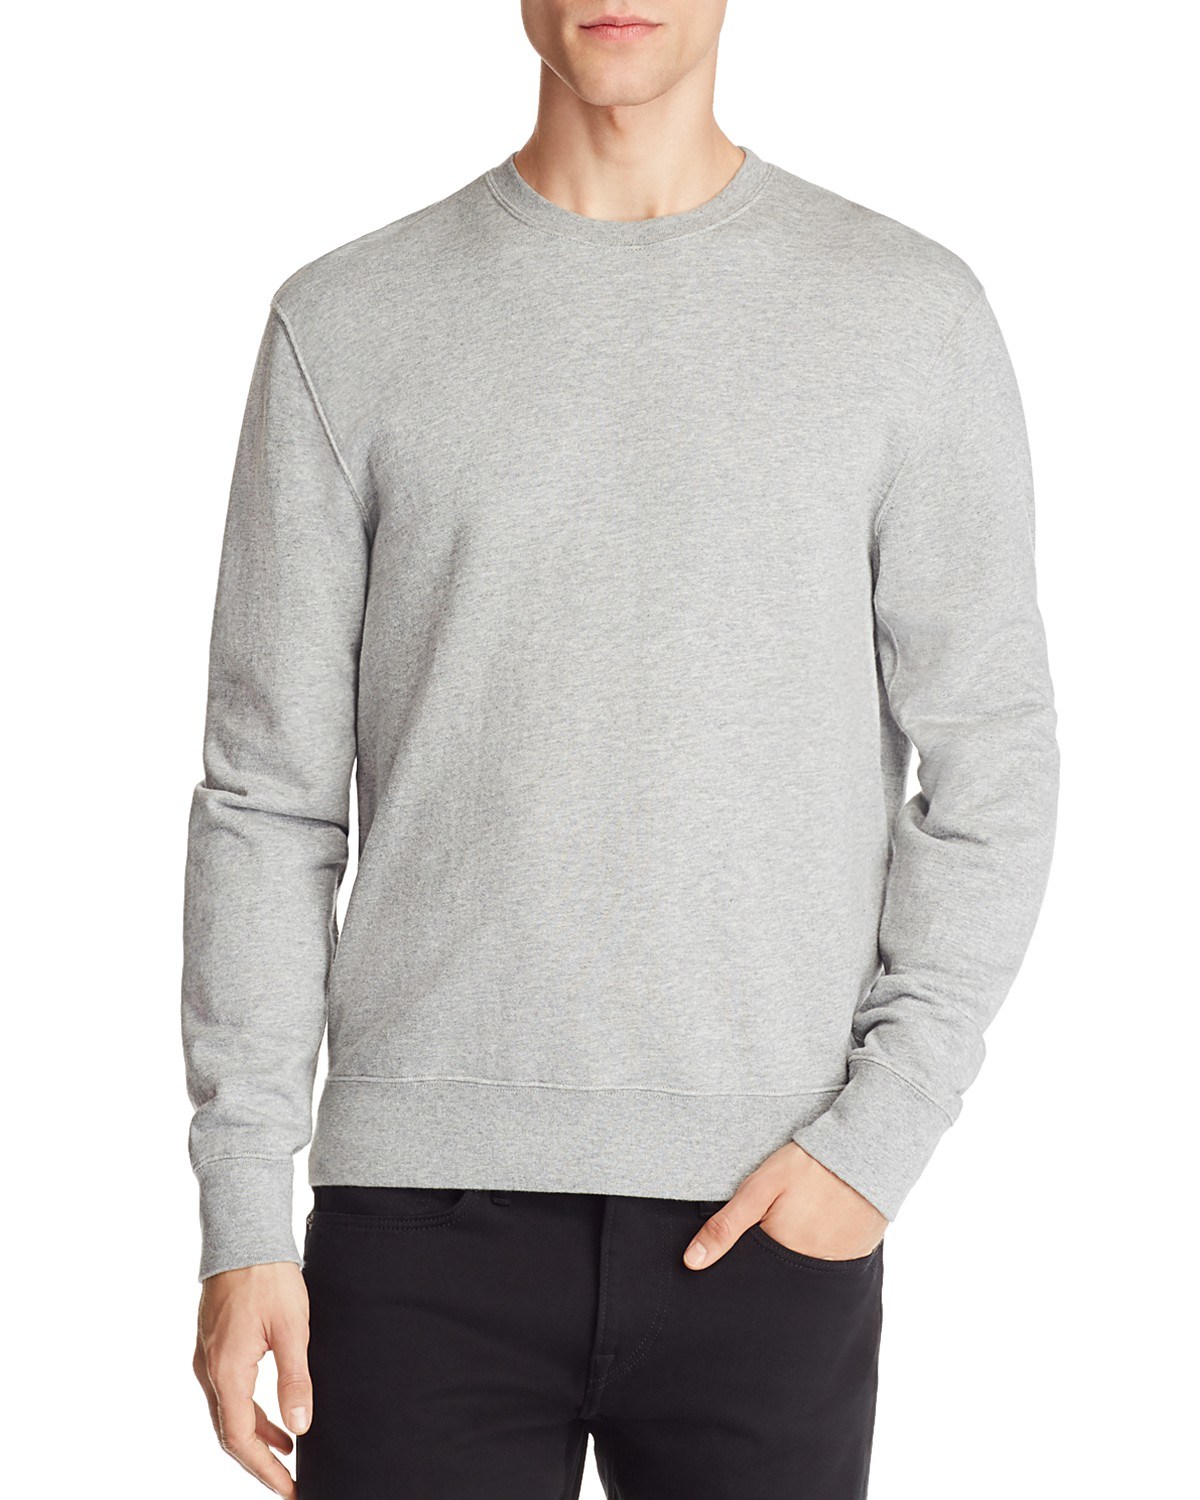 Wholesale Mens Fashion French Terry Essential Sweatshirts